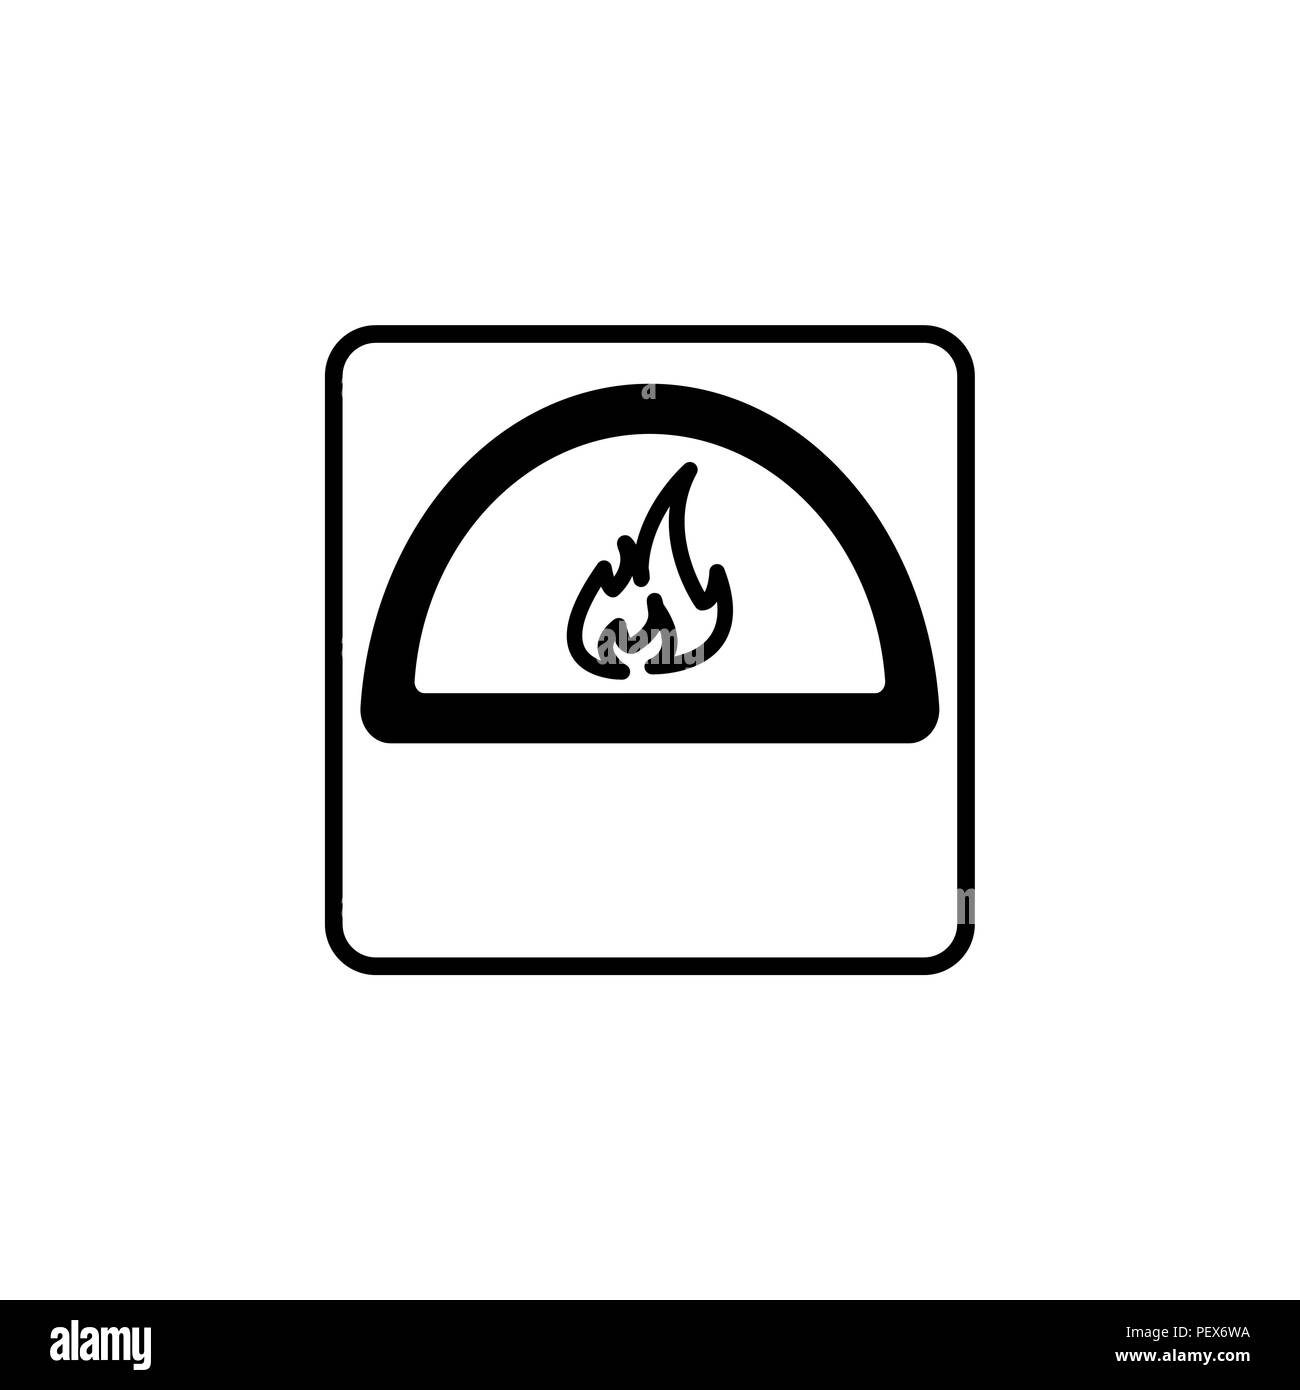 oven line icon. vector illustration black on white background Stock Vector